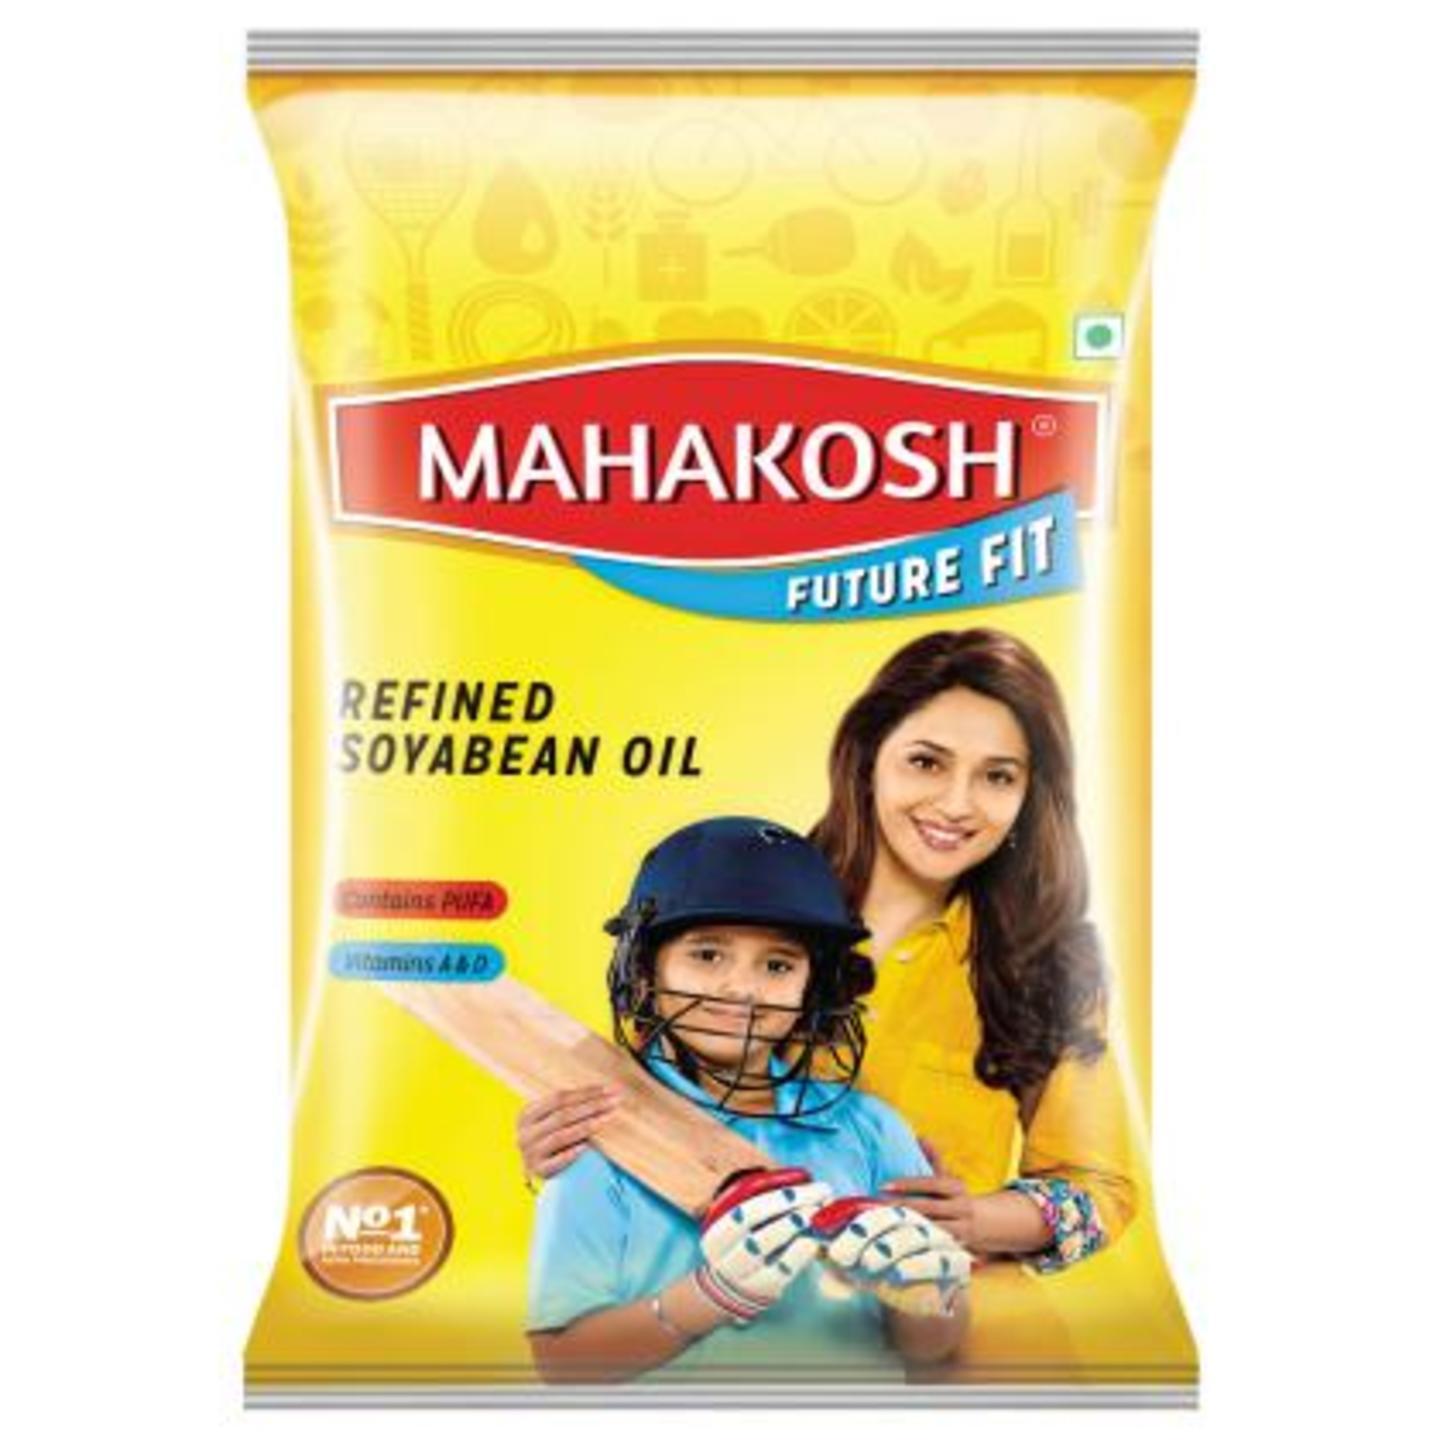 Mahakosh Future Fit Refined Soyabean Oil 1 L